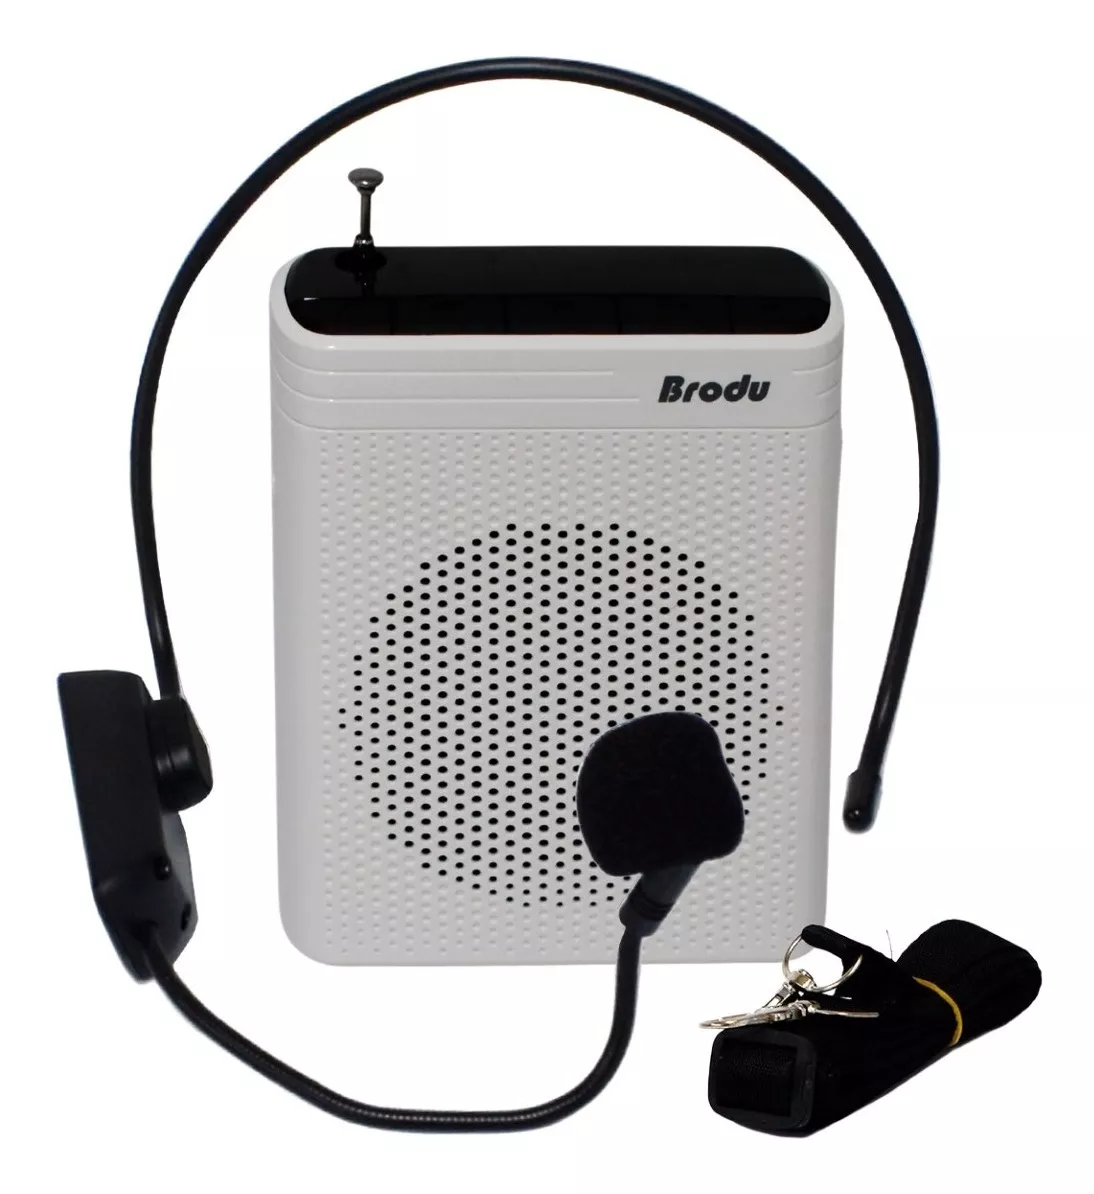 Portable Speaker with Wireless Microphone BTS1383: Buy Portable Speaker with Wireless Microphone Sri Lanka | ido.lk